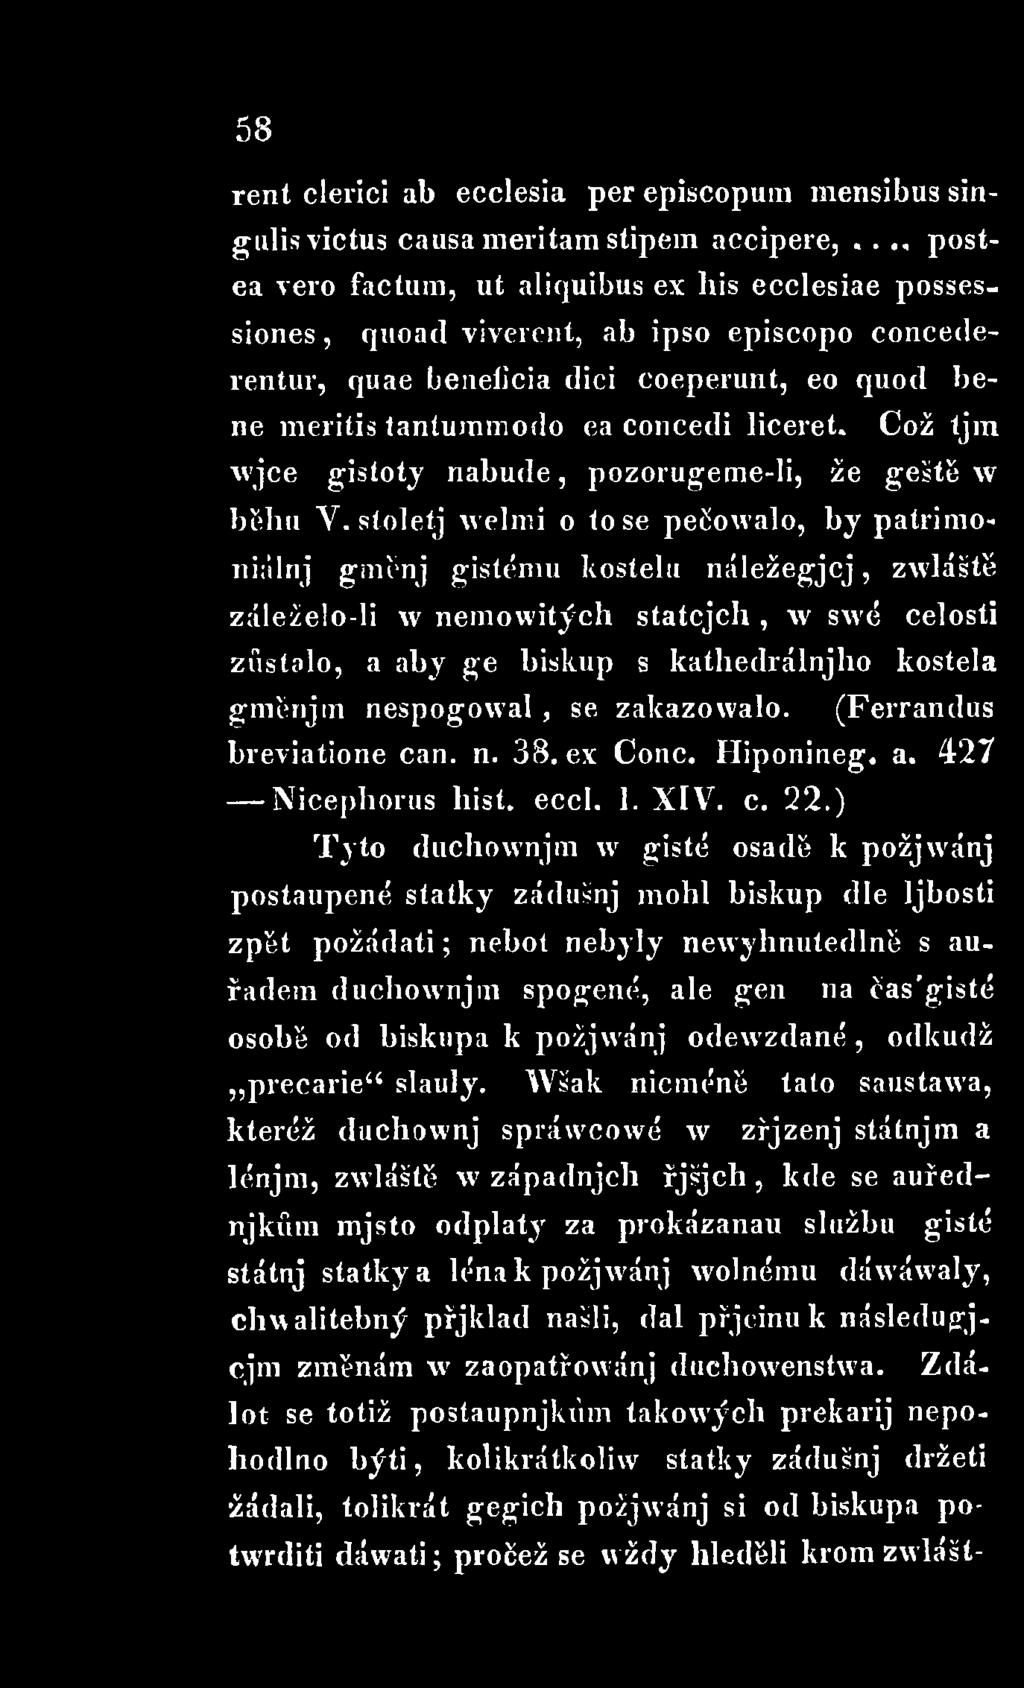 nespogow al, se zakazowalo. (Ferrandus breviatione can. n. 38. ex Conc. Hiponineg. a. 427 Nicephorus liist. eccl. 1. XIV7. c. 2 2.